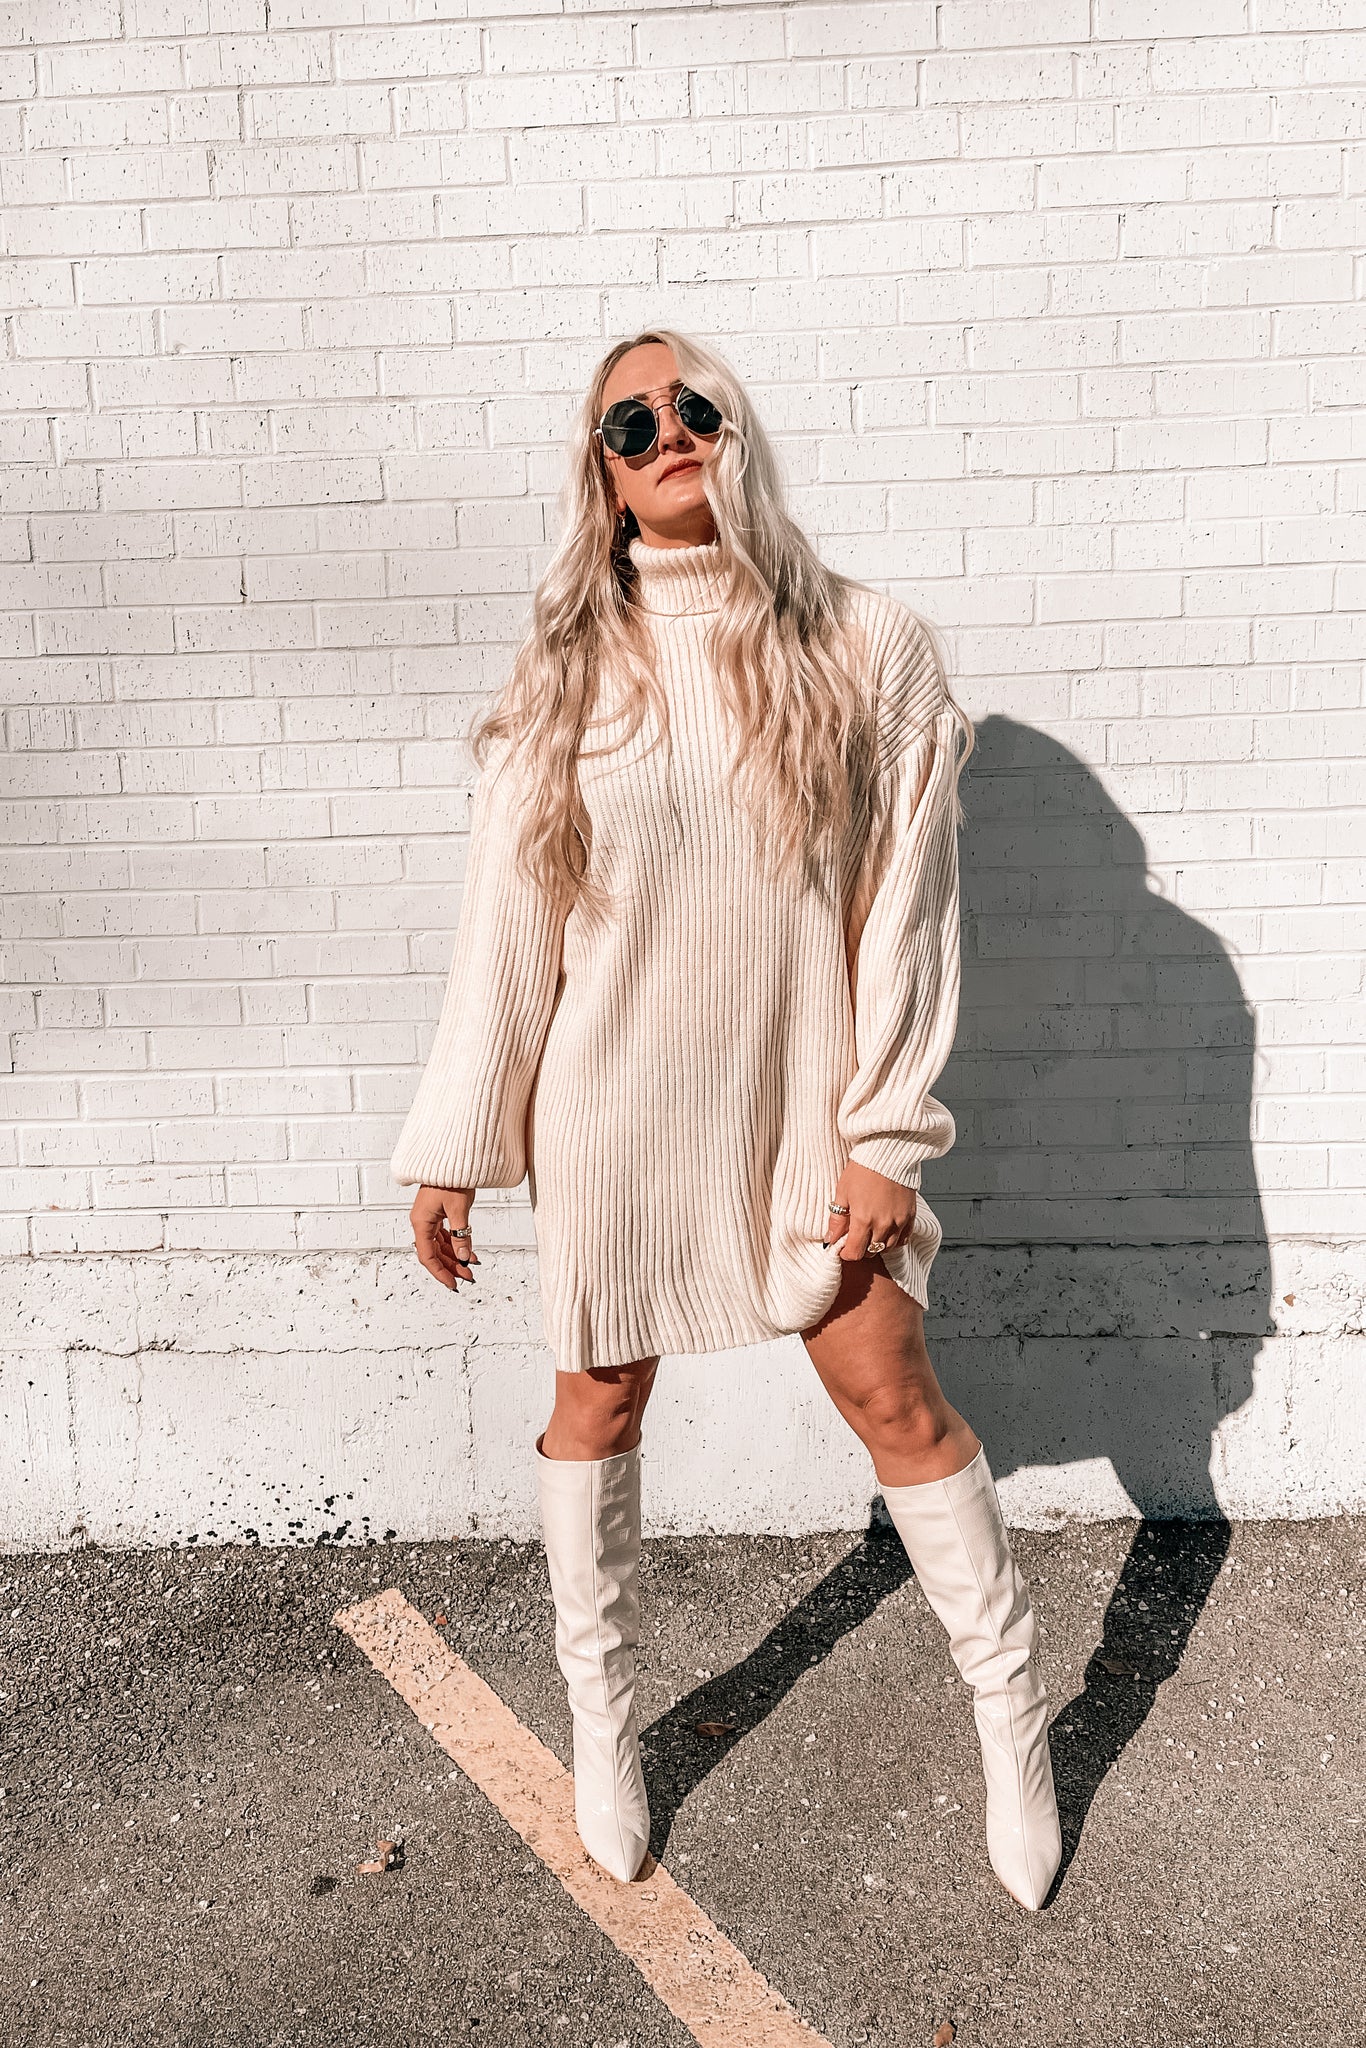 Amazon.com: White Knitted Sweater Dress